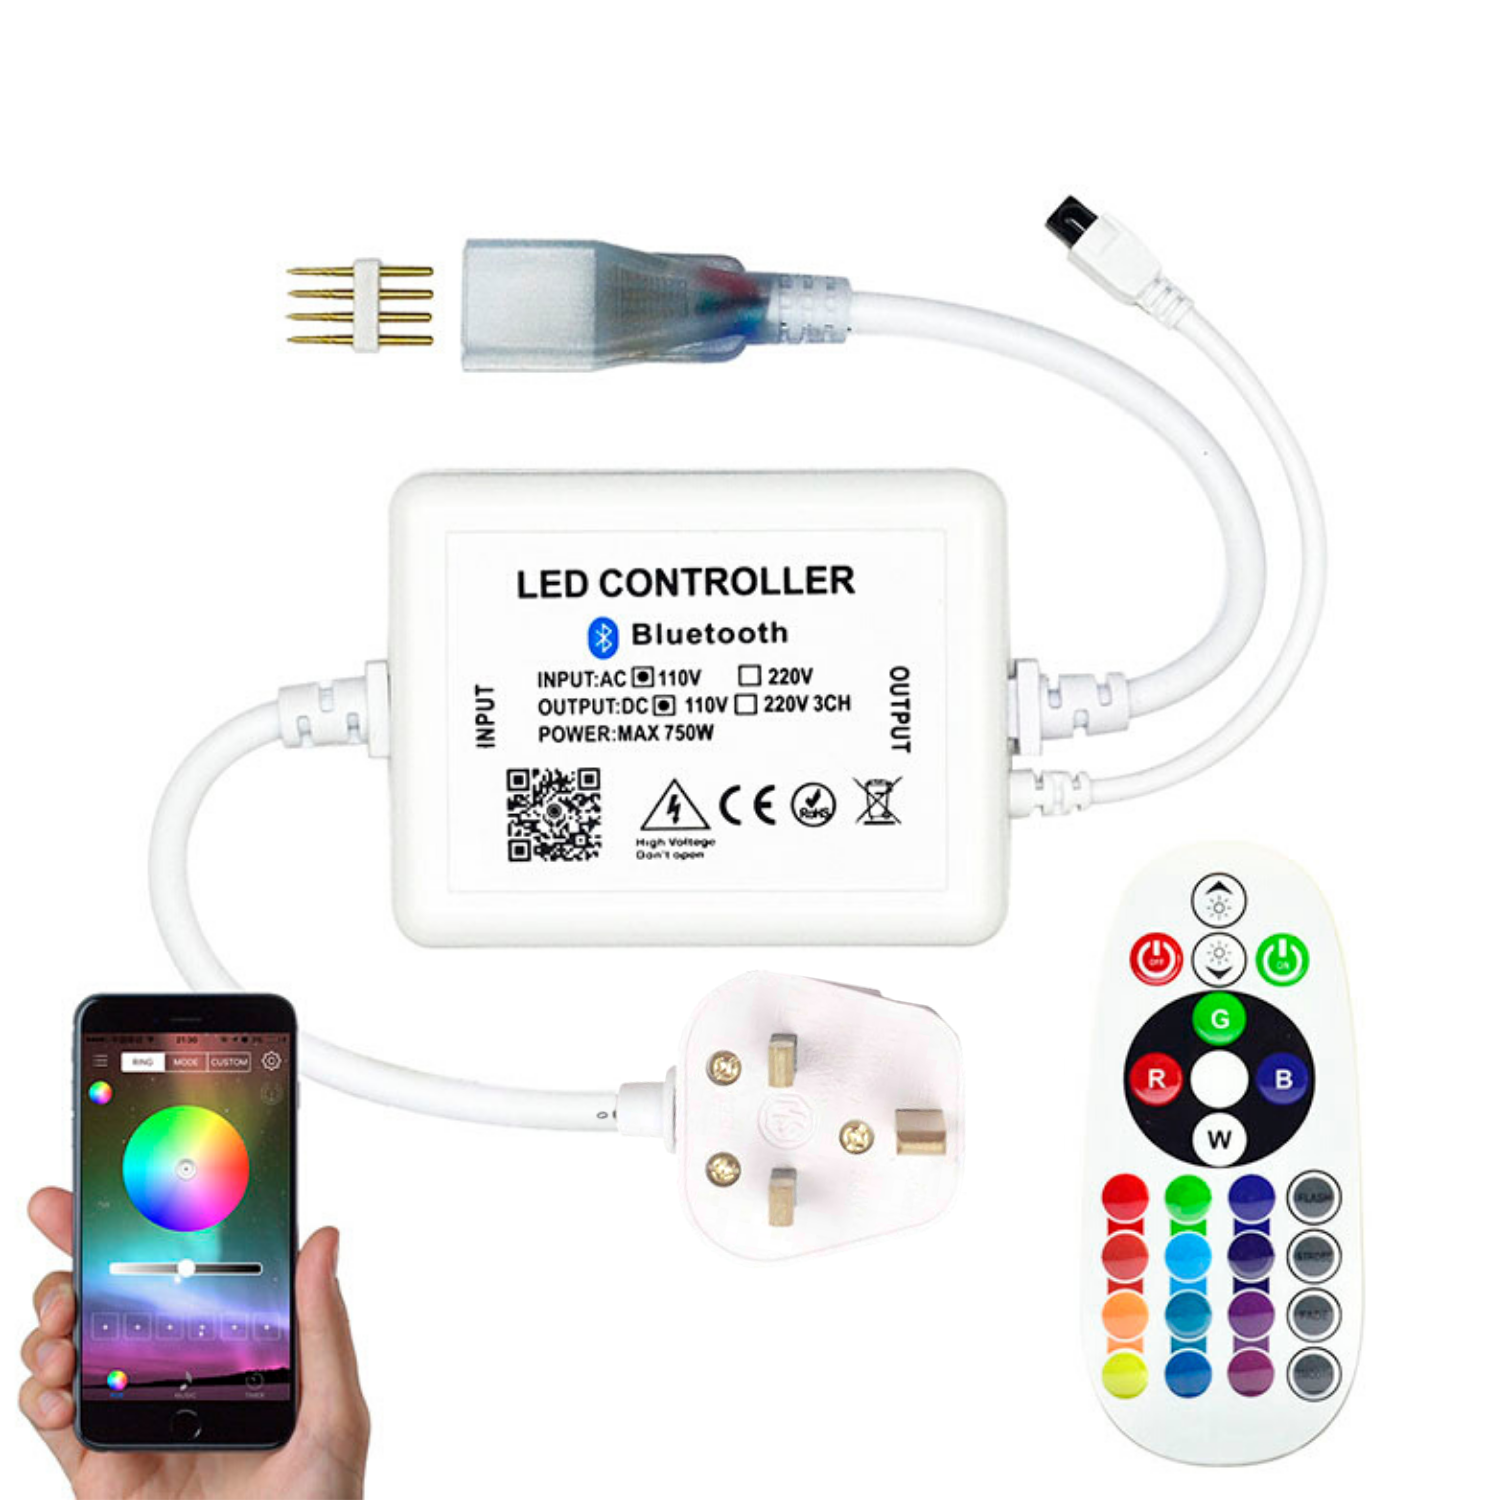 RGB LED Strip 220V 240V 144 LEDs/m IP67 Wireless Bluetooth App Control with Remote - ATOM LED